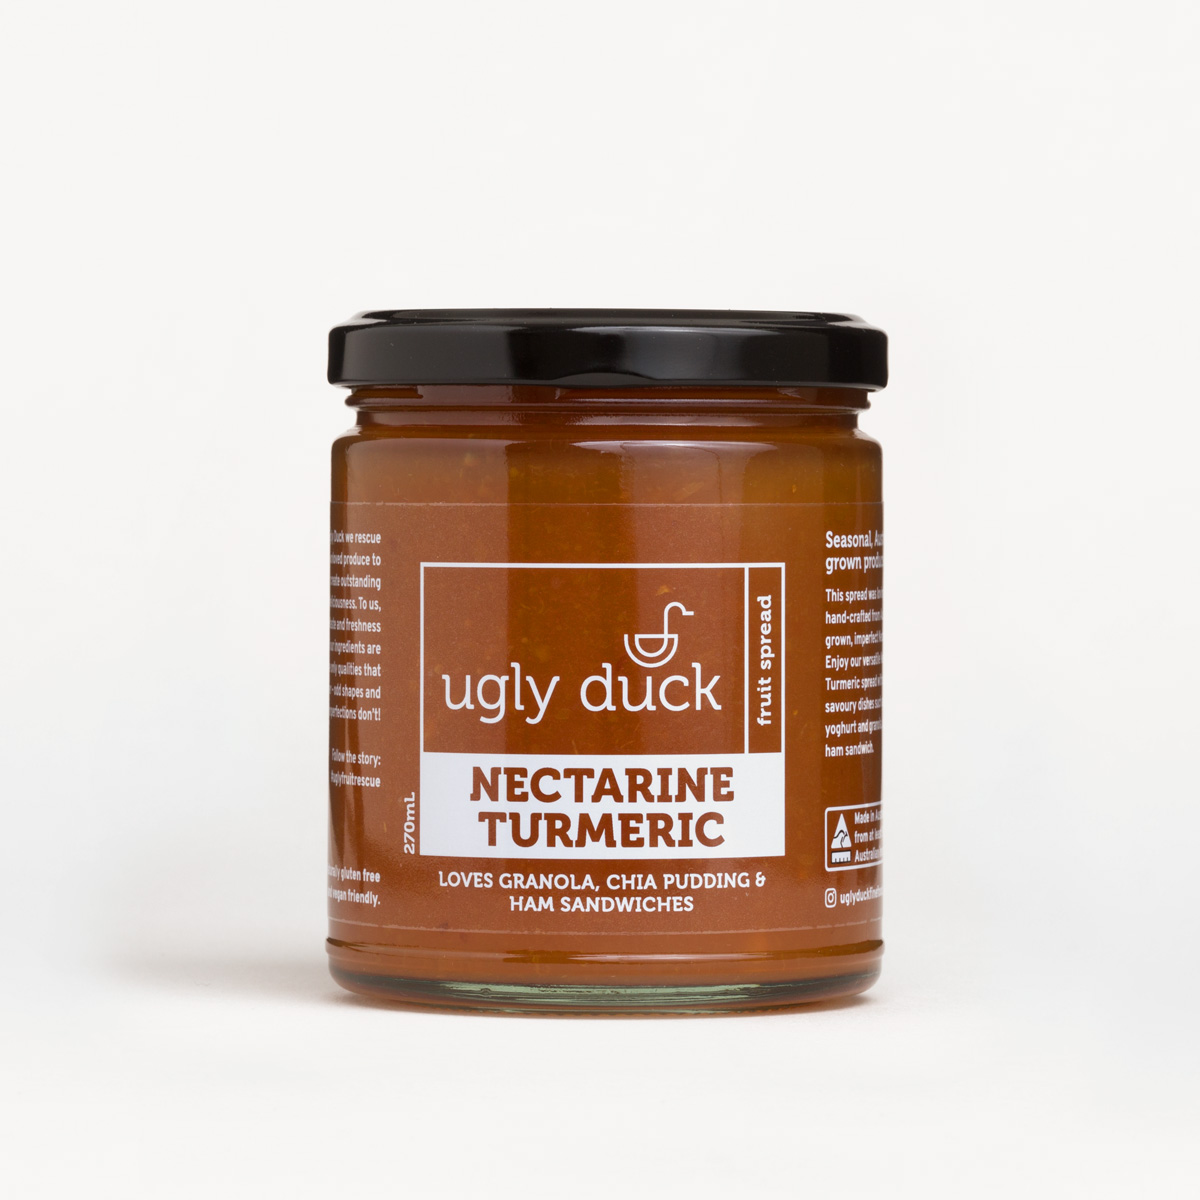 Nectarine Turmeric Spread jar with label